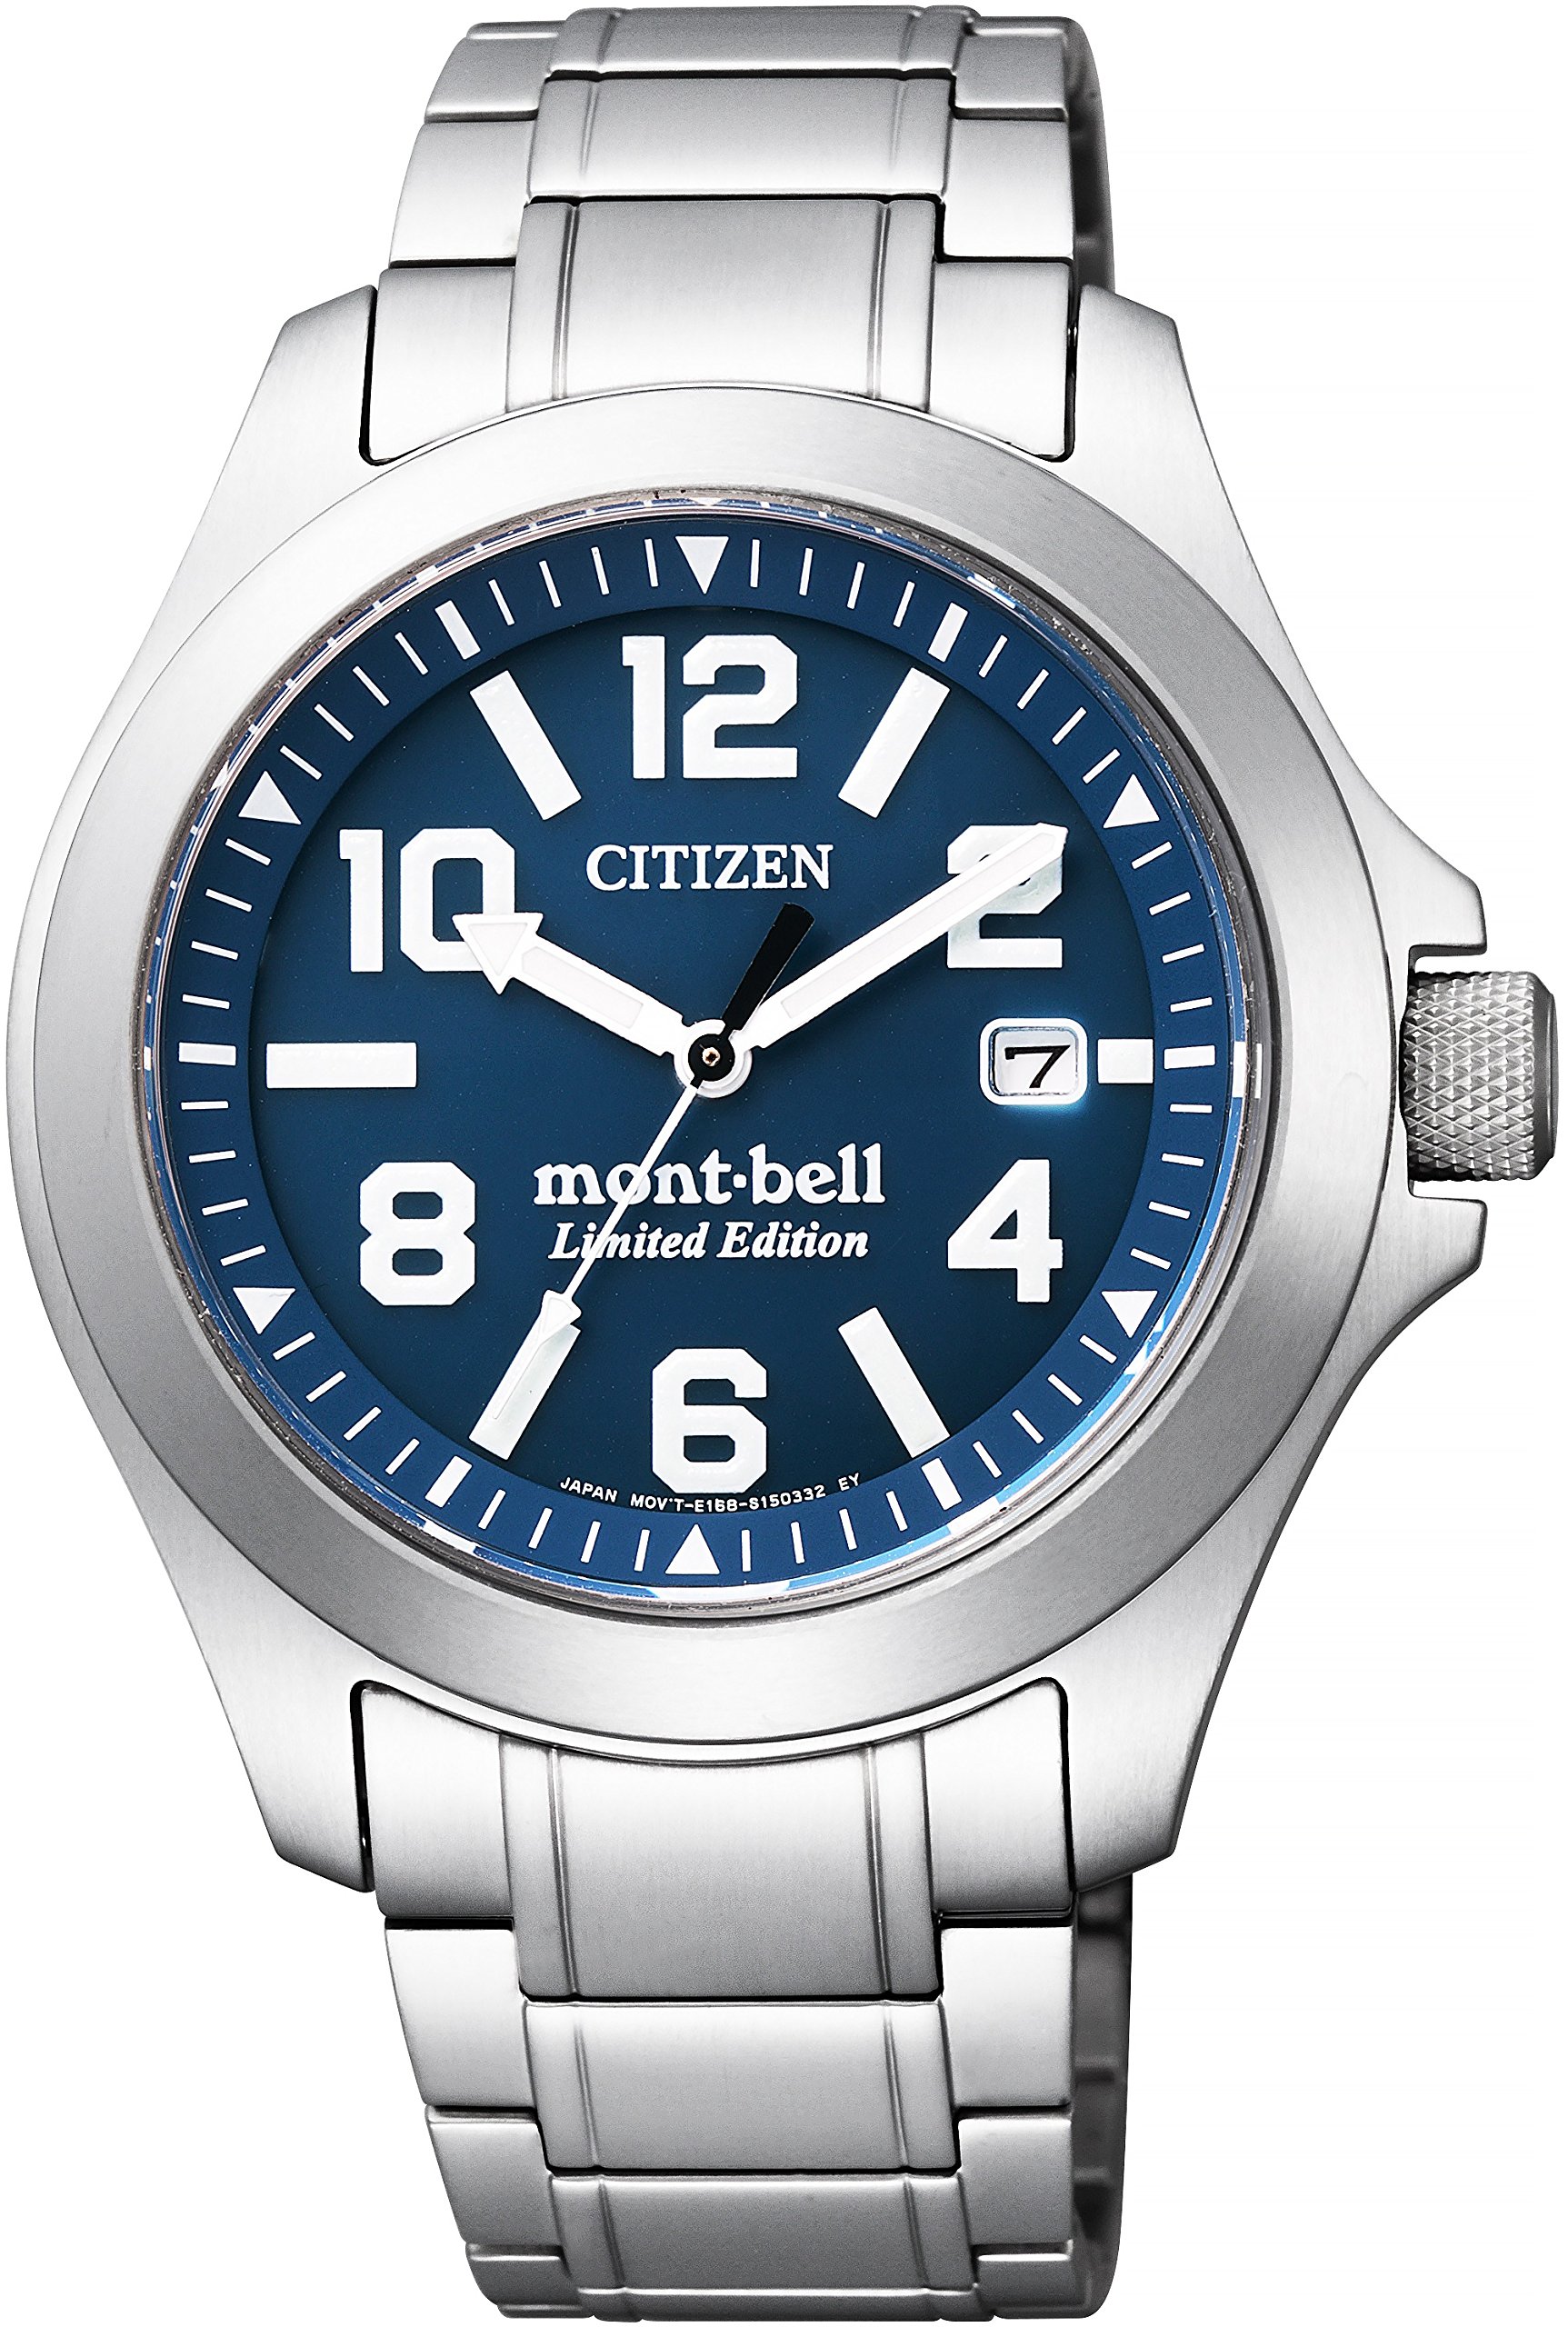 Mua Citizen BN0121-51L Promaster Eco Drive Land Series Pro Master x mont Bell Men's Watch, Dial Color - Navy Blue, watch trên Amazon Nhật chính hãng 2022 | Fado